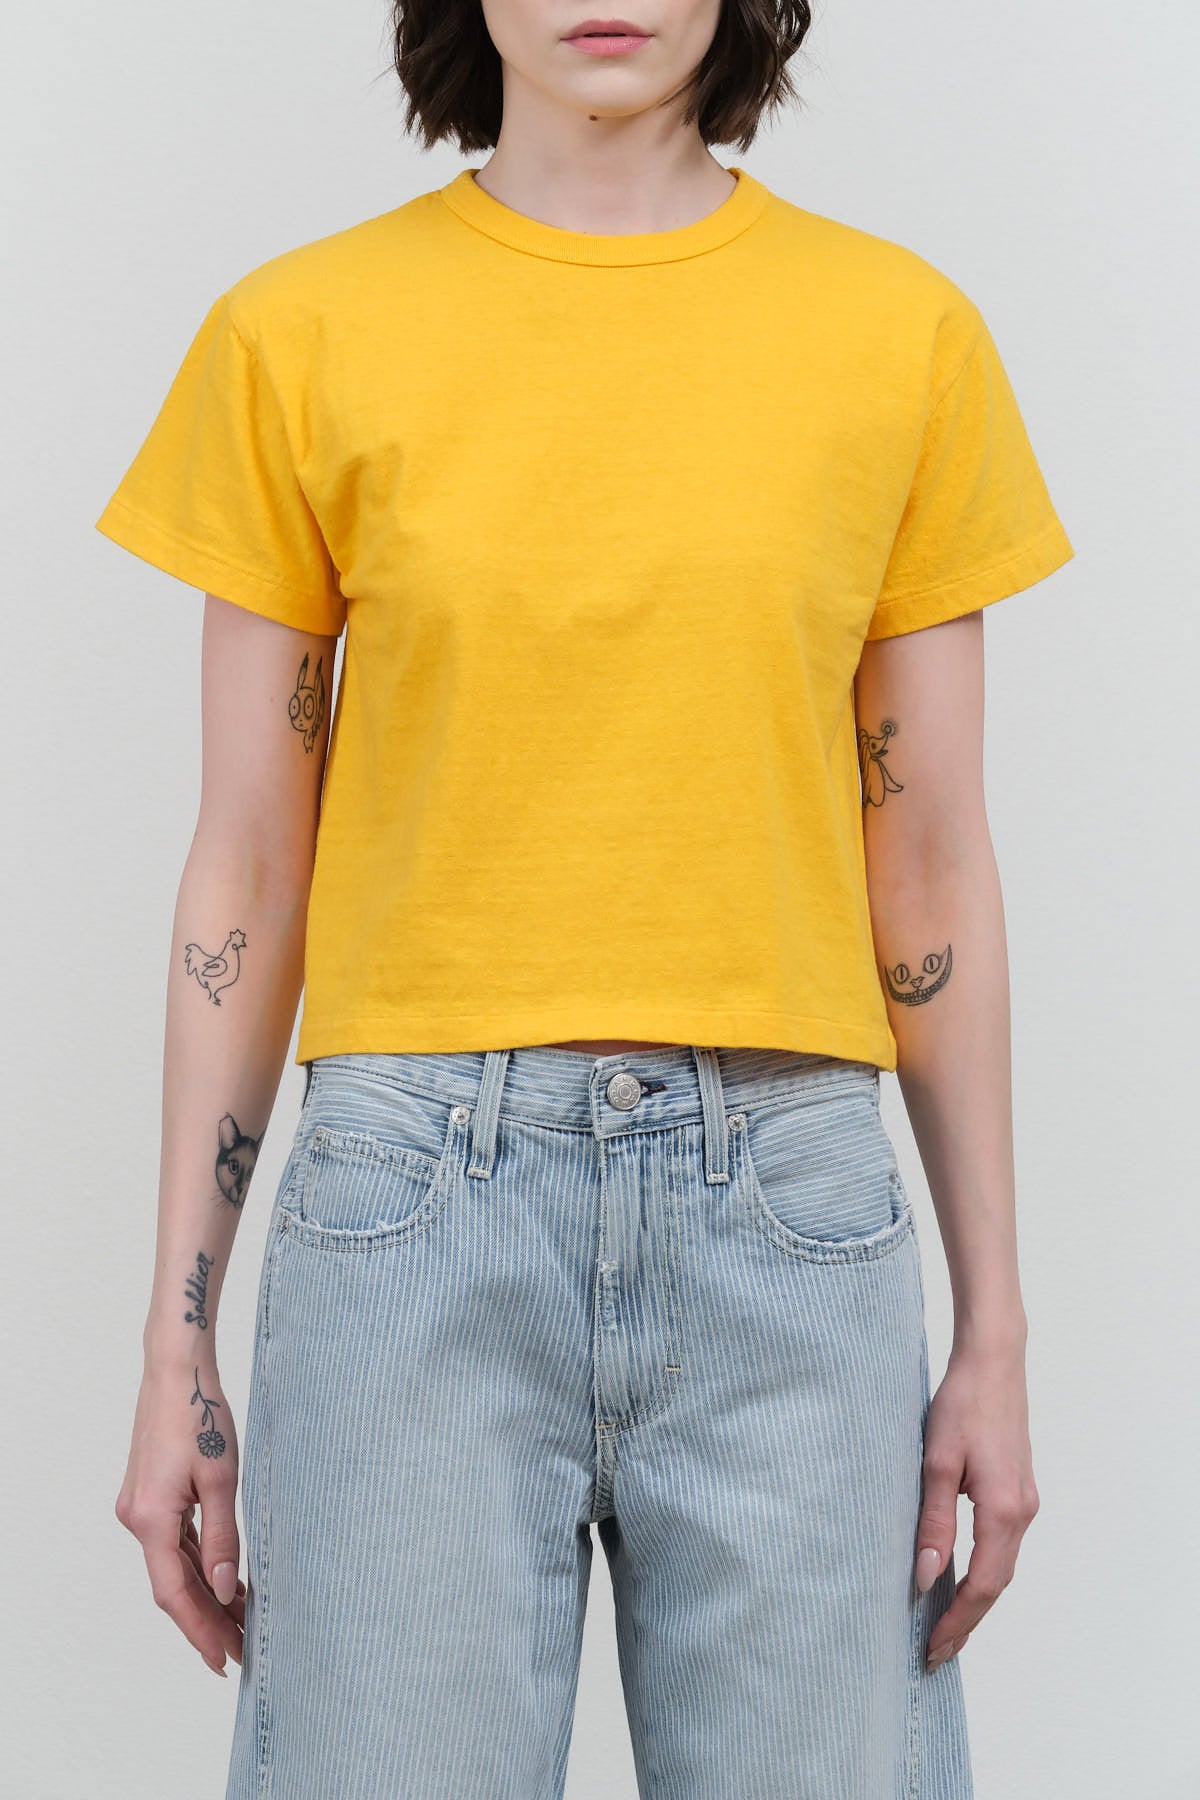 Hi'aka T-Shirt by Sunray Sportswear in Citrus